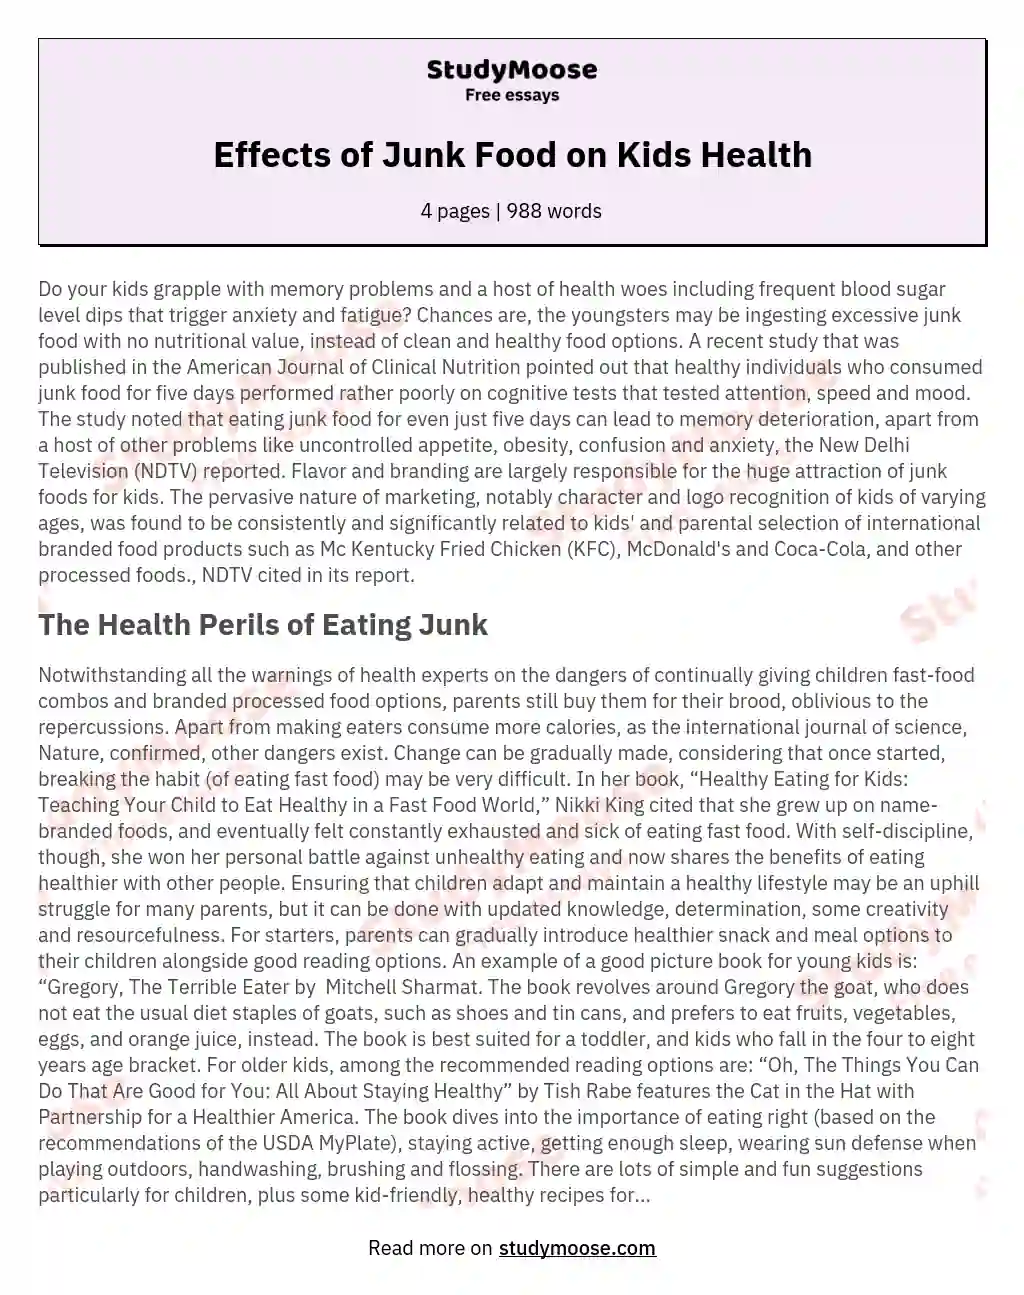 junk food vs healthy food essay